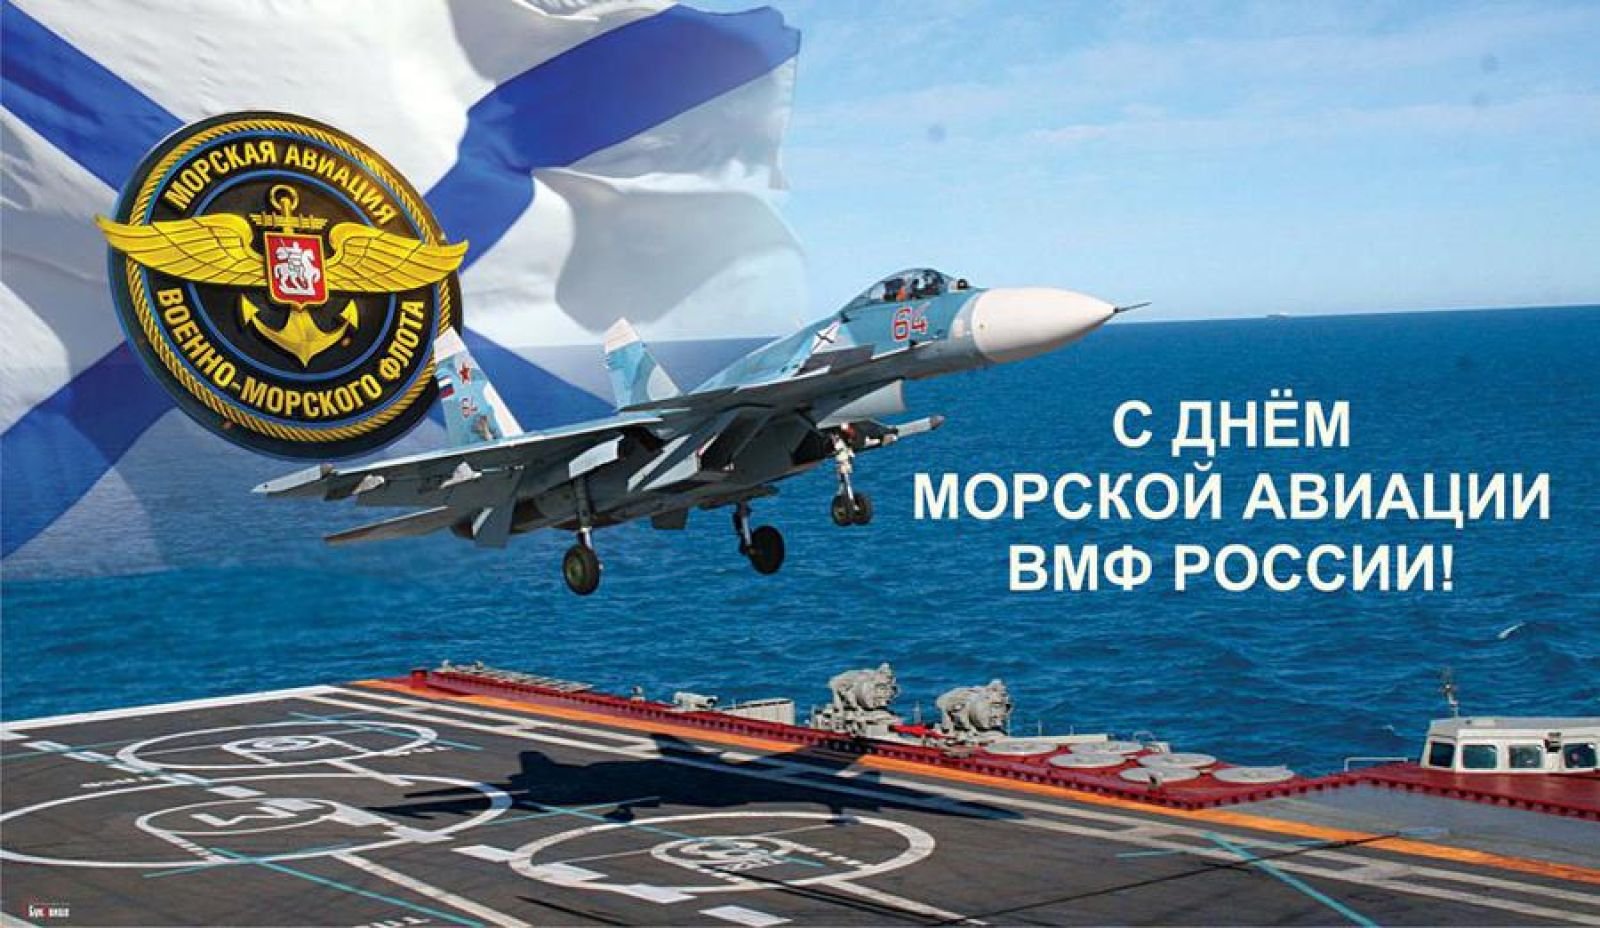 Russian navy aviation day